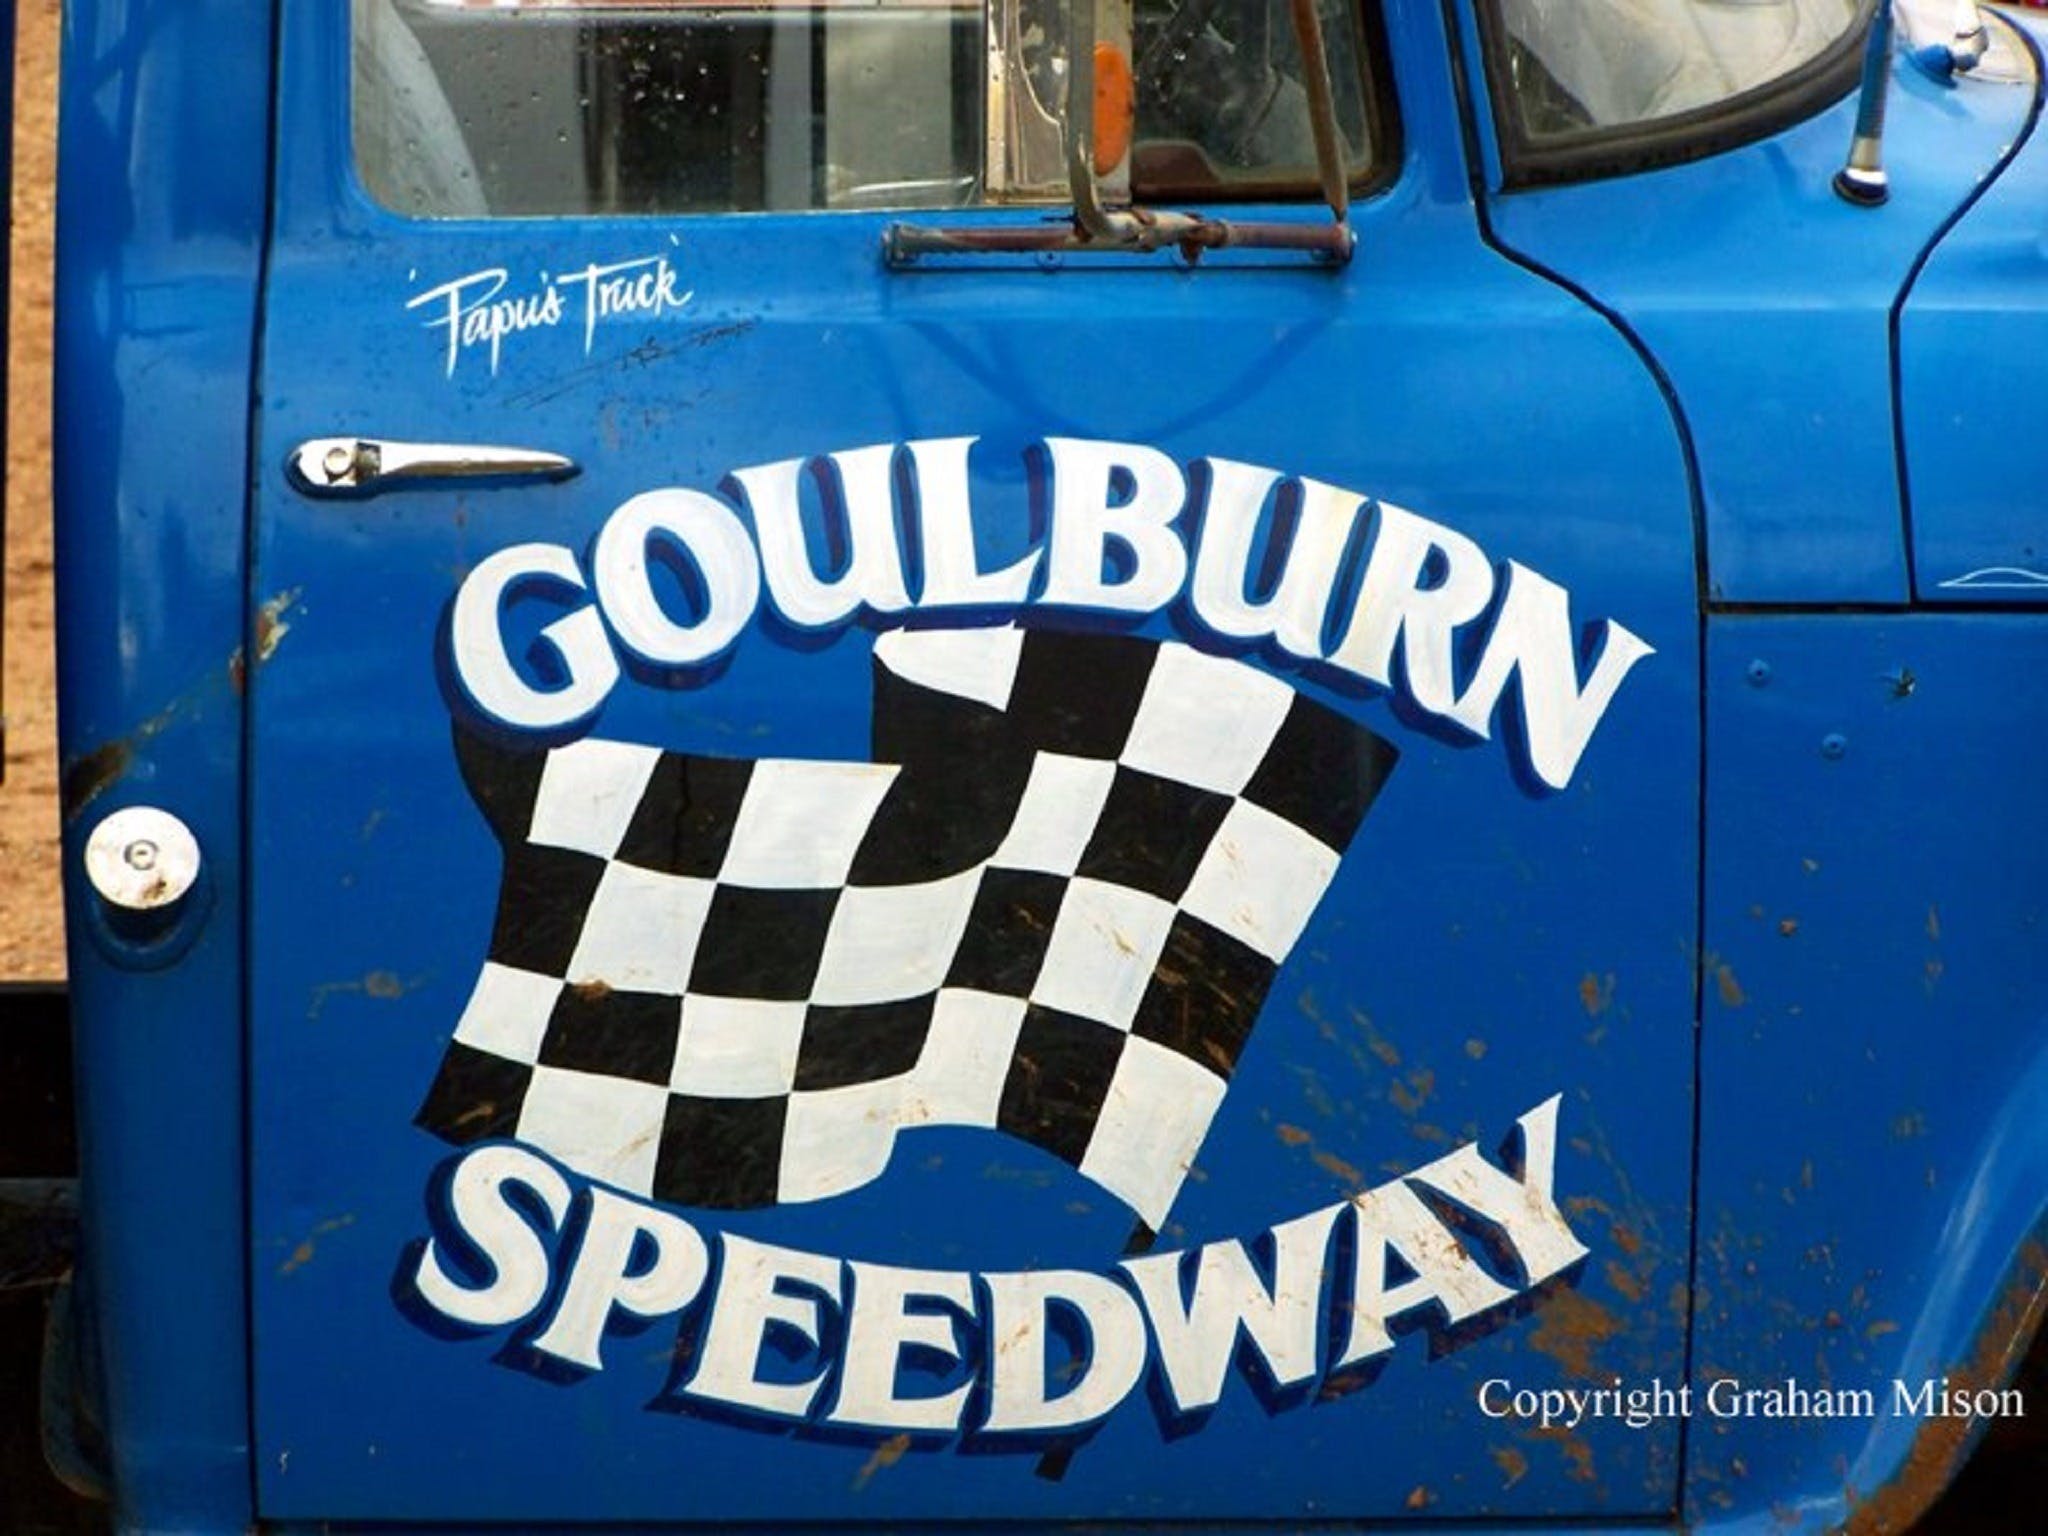 50 years of racing at Goulburn Speedway - Accommodation Mount Tamborine